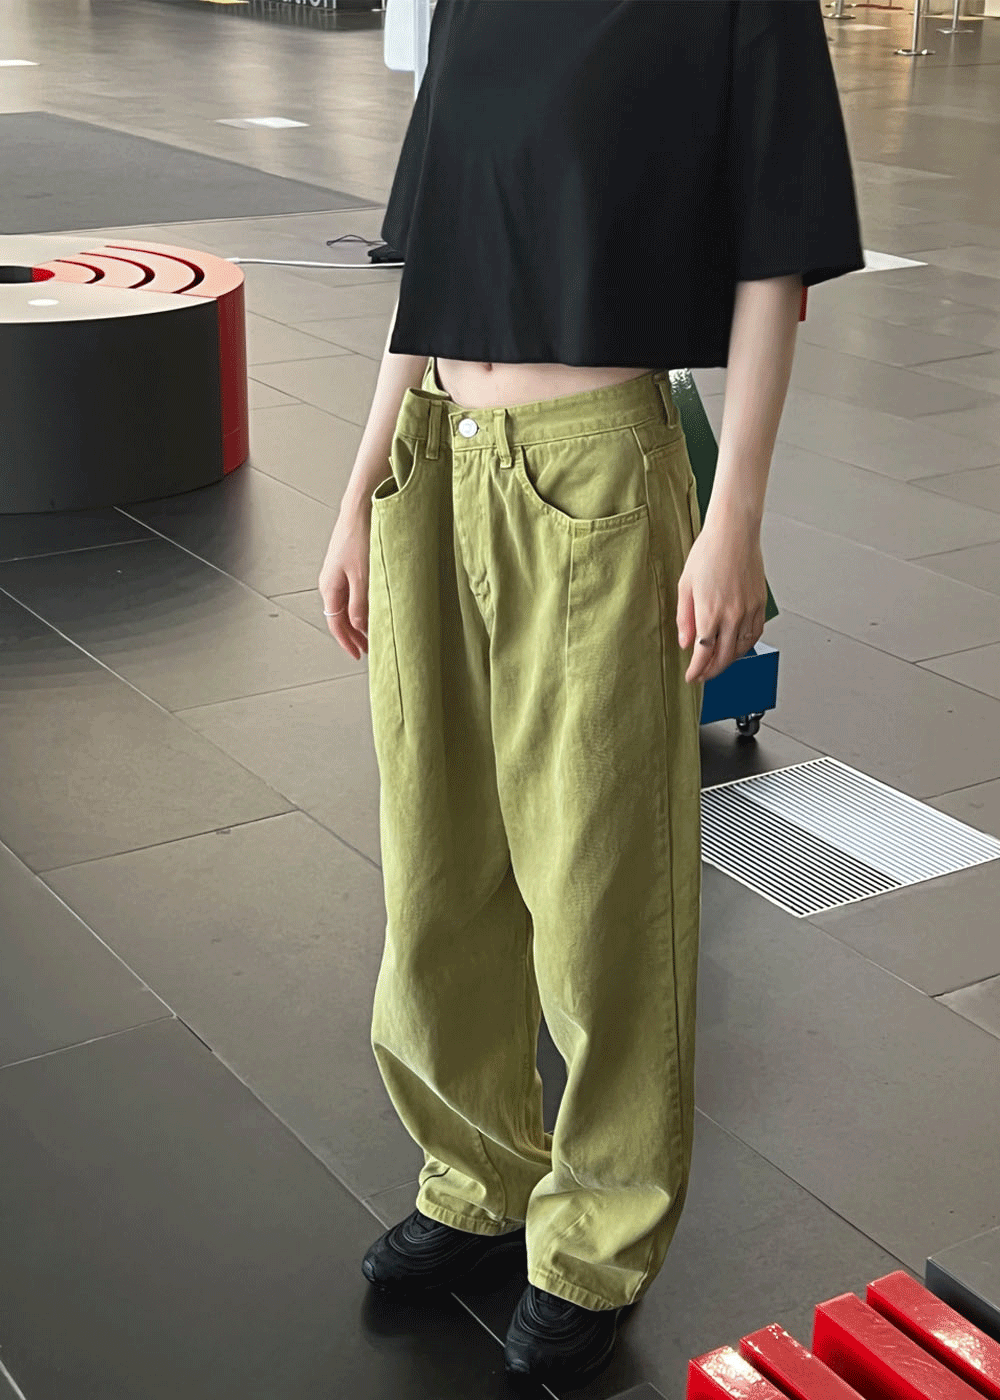 Unisex color dyeing pants